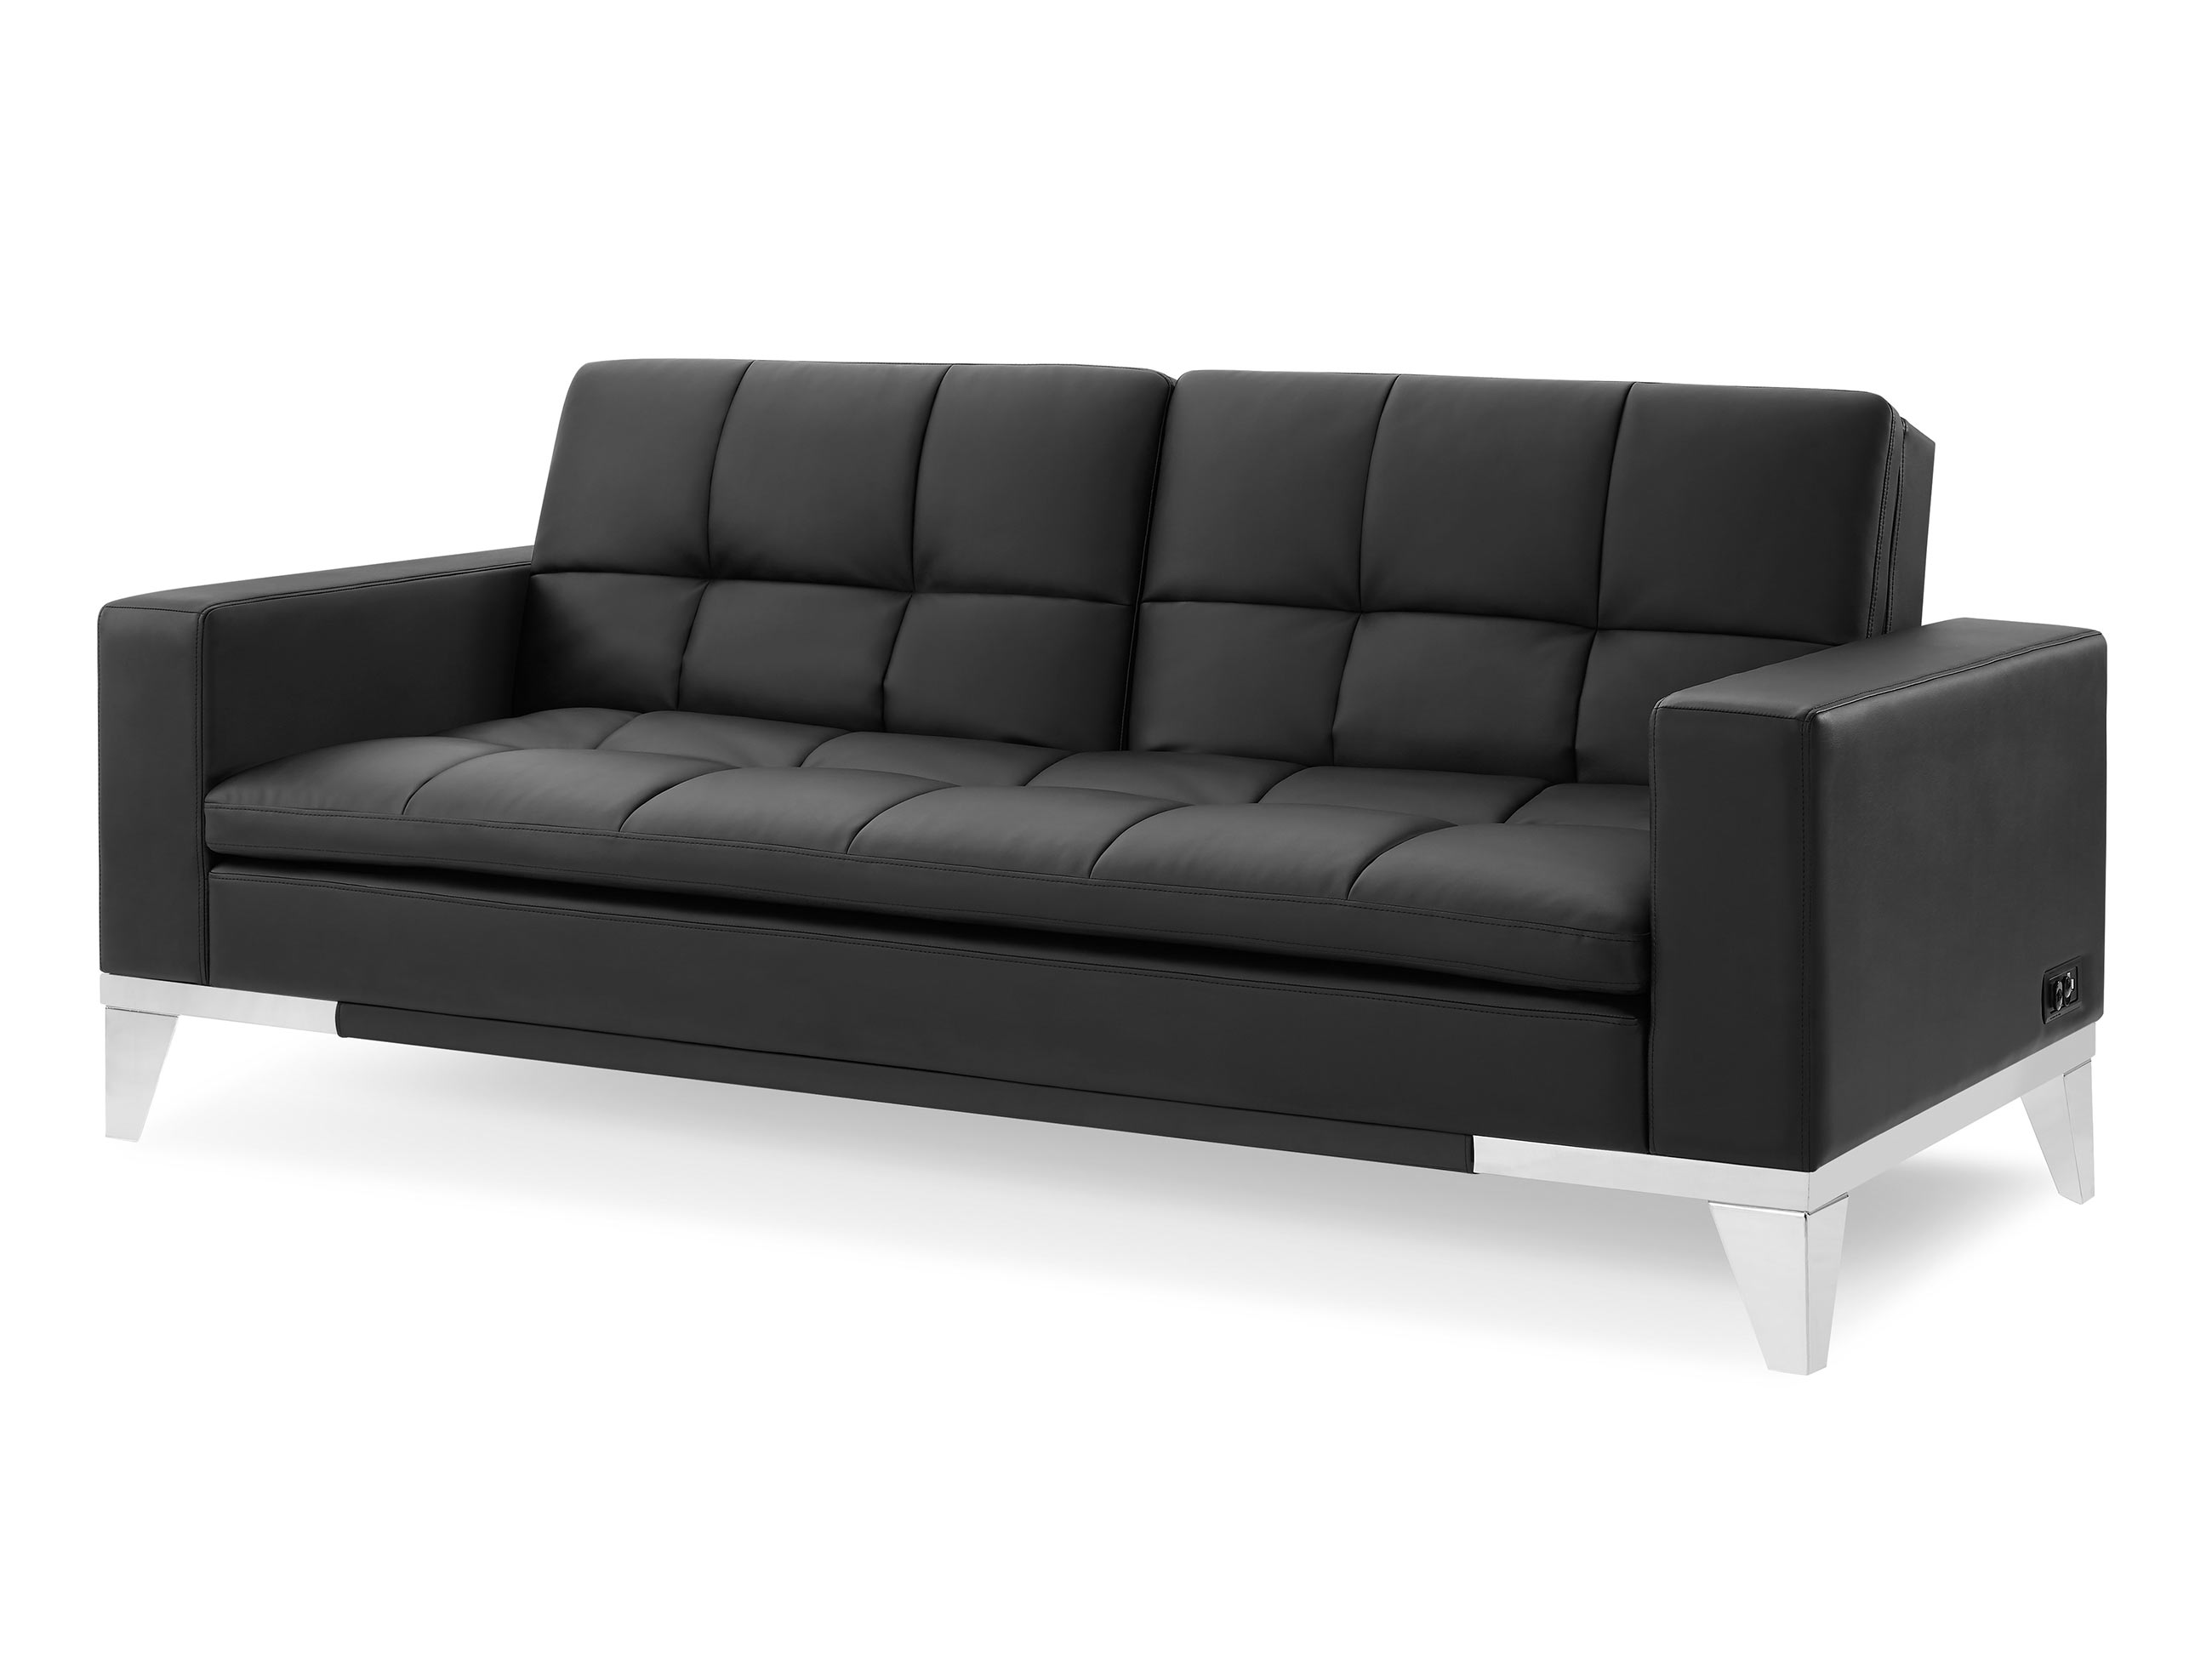 Westridge Convertible Sofa Black by Serta Lifestyle